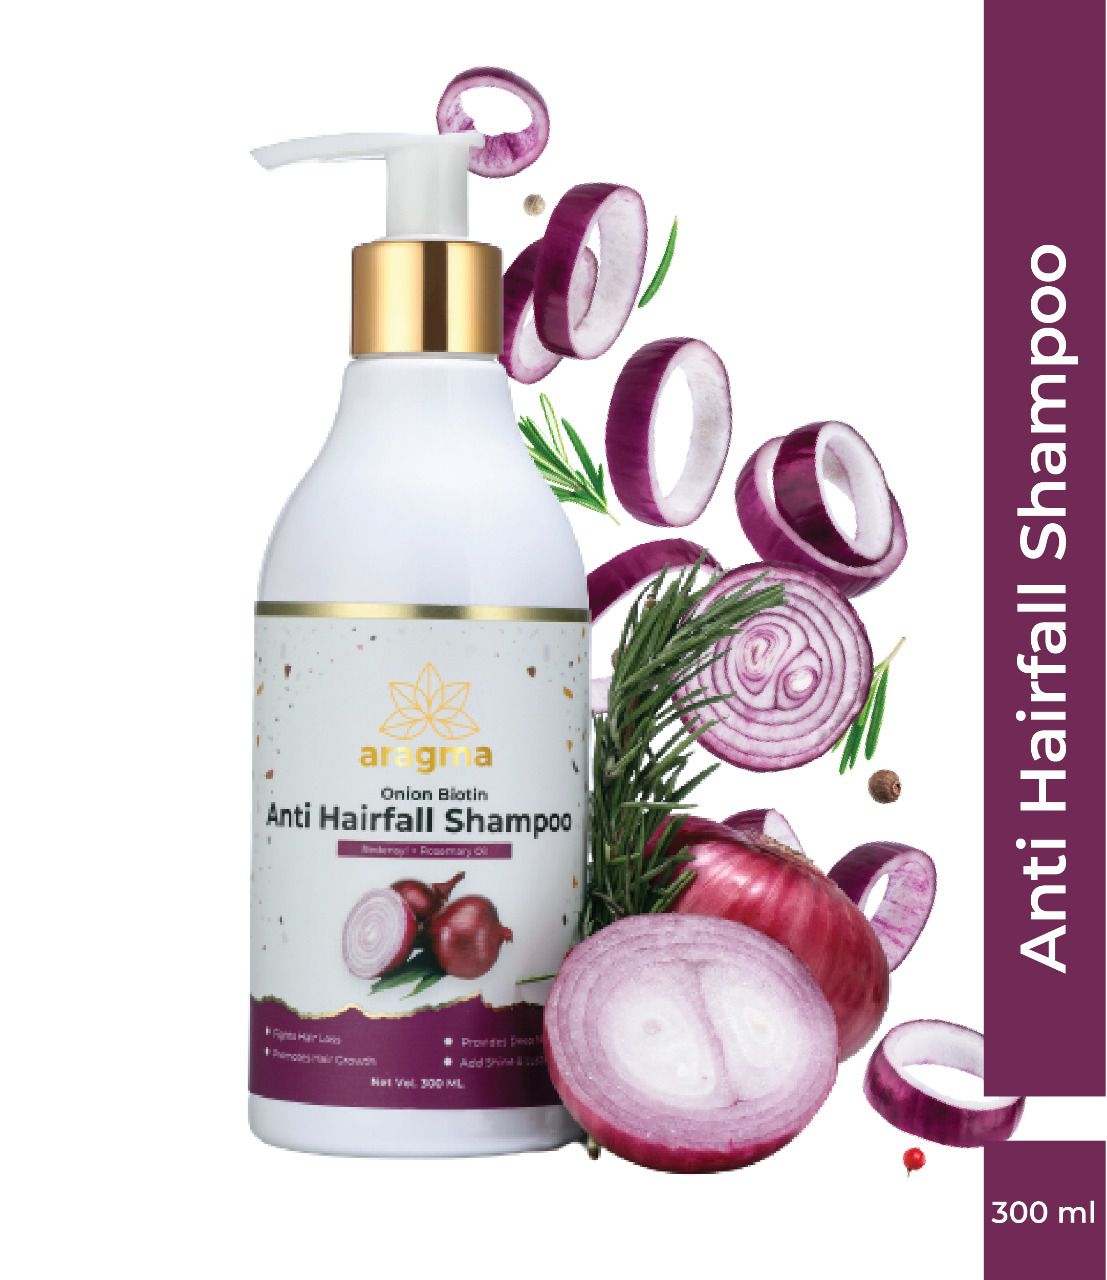 Aragma Onion Biotin Anti Hairfall Shampoo (Redensyl + Rosemary Oil) -  No Parabens, Sulphate, Silicones & Color, 300 ml